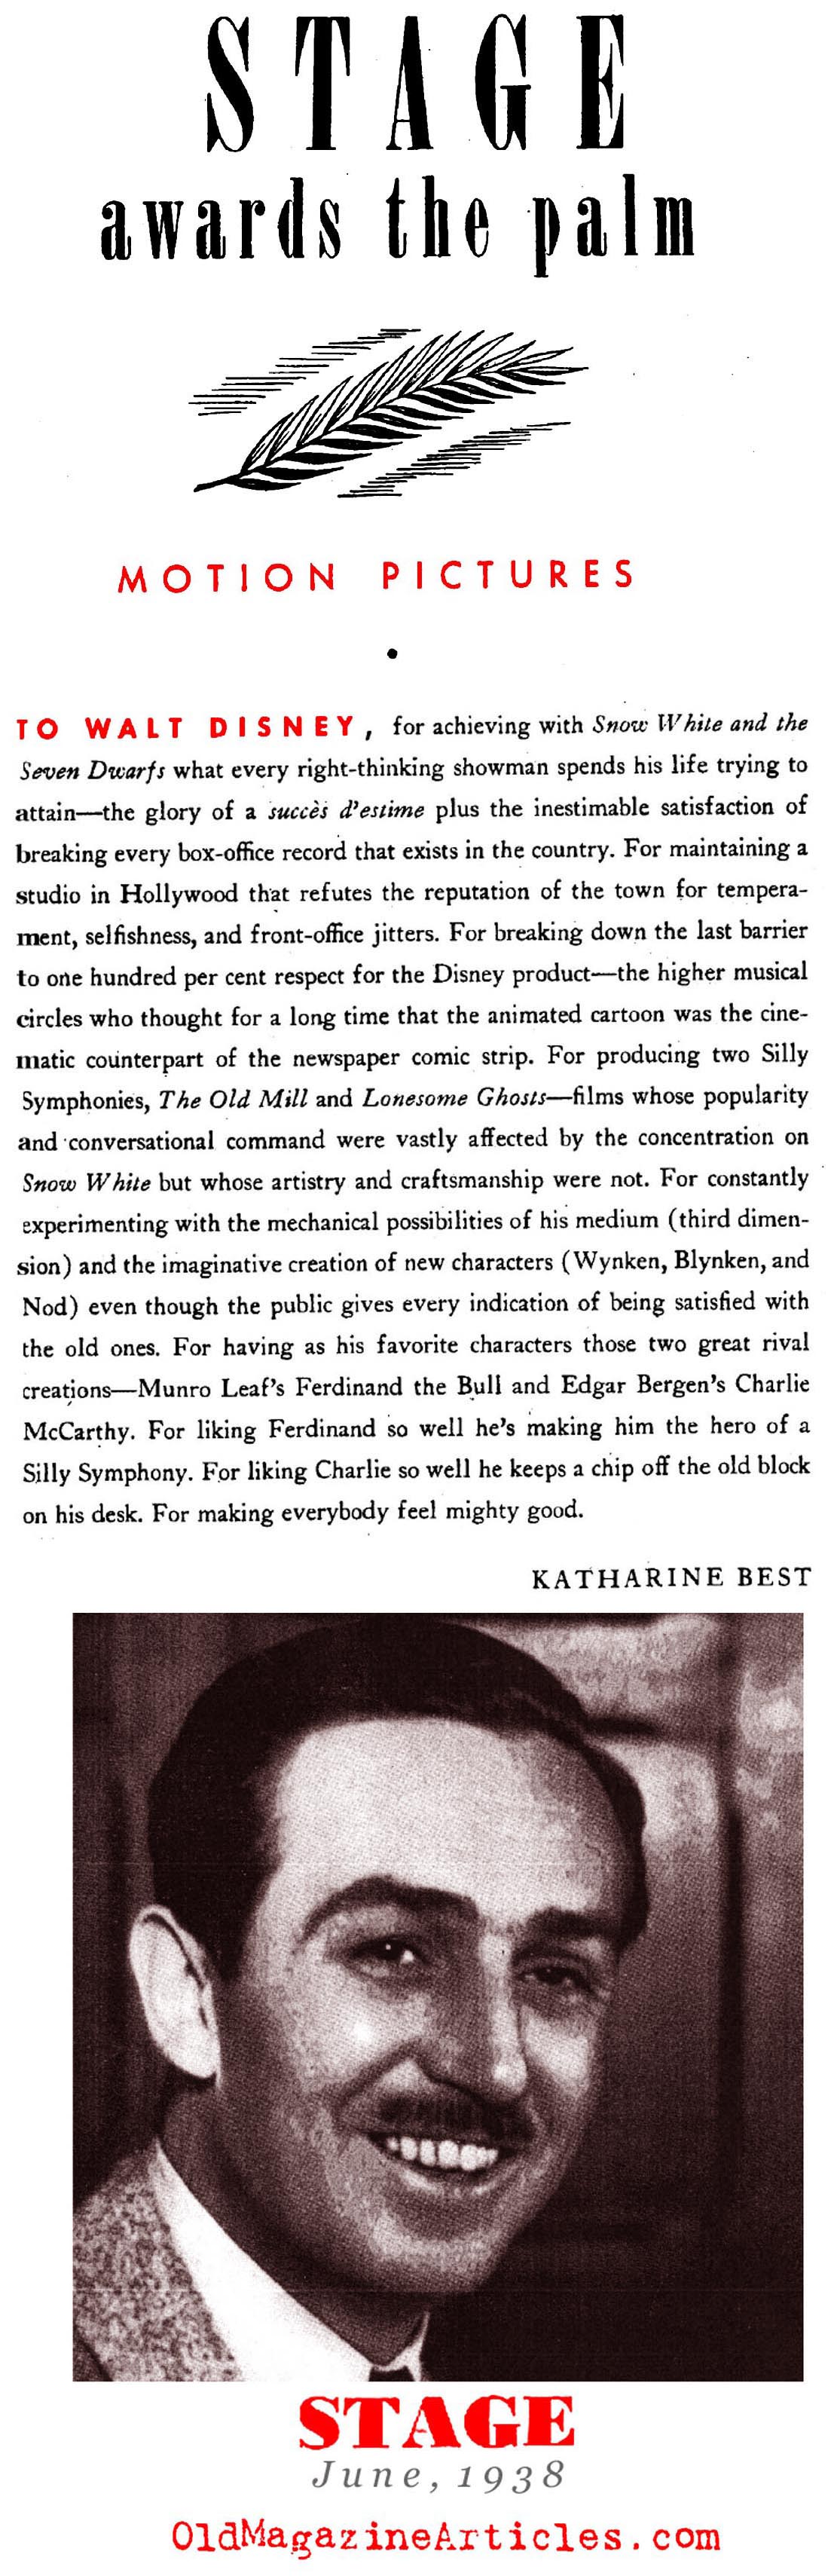 More Peer Adoration for Walt Disney (Stage Magazine, 1938)